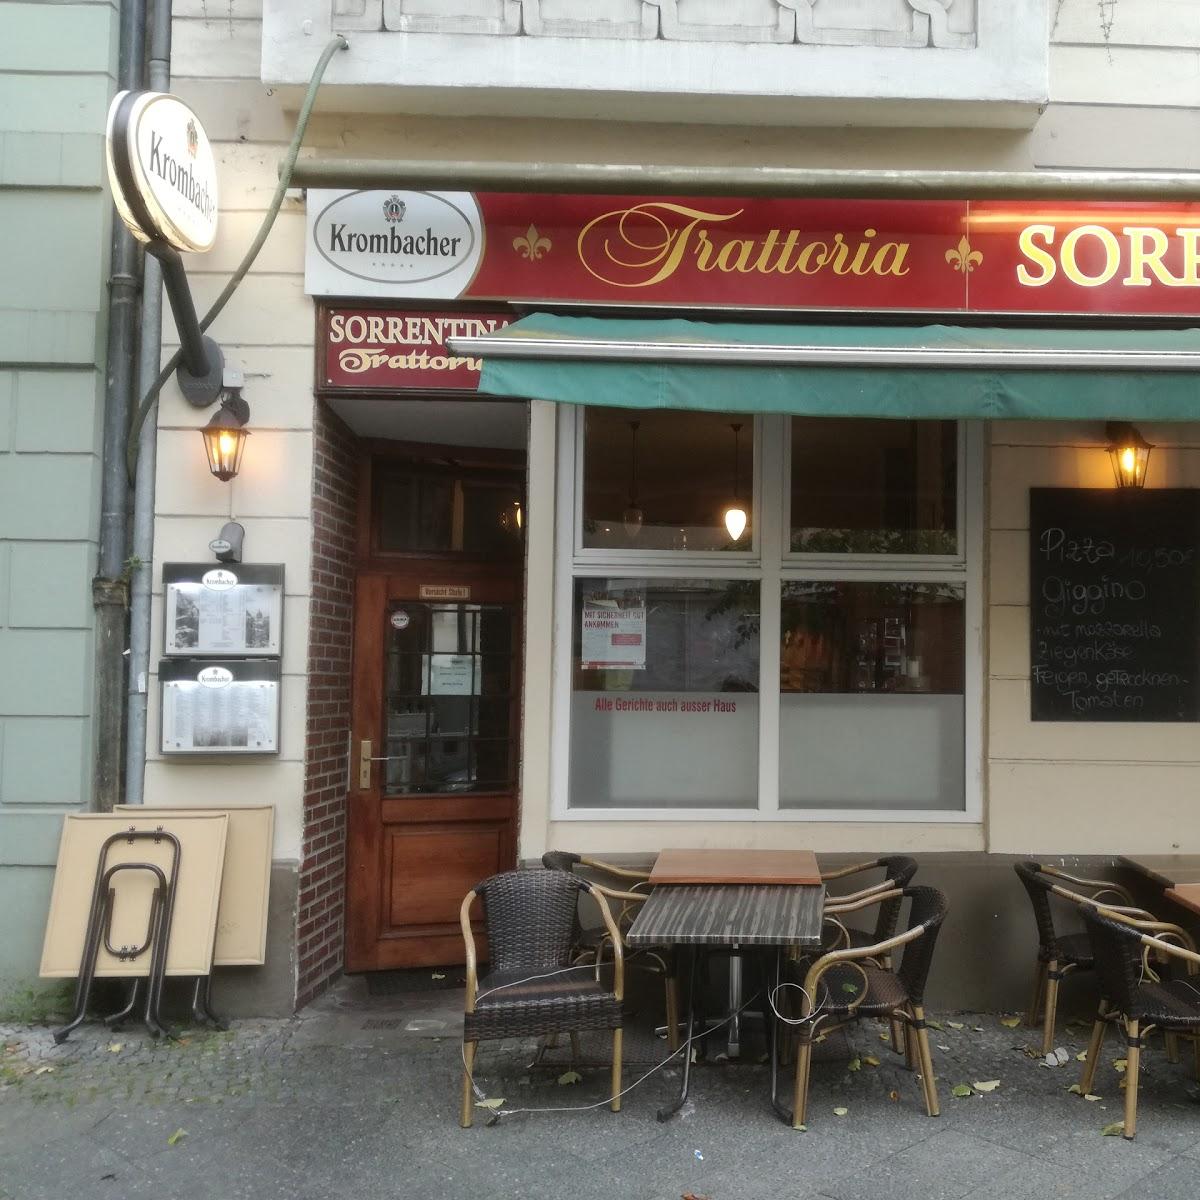 Restaurant "Trattoria Sorrentina" in Berlin